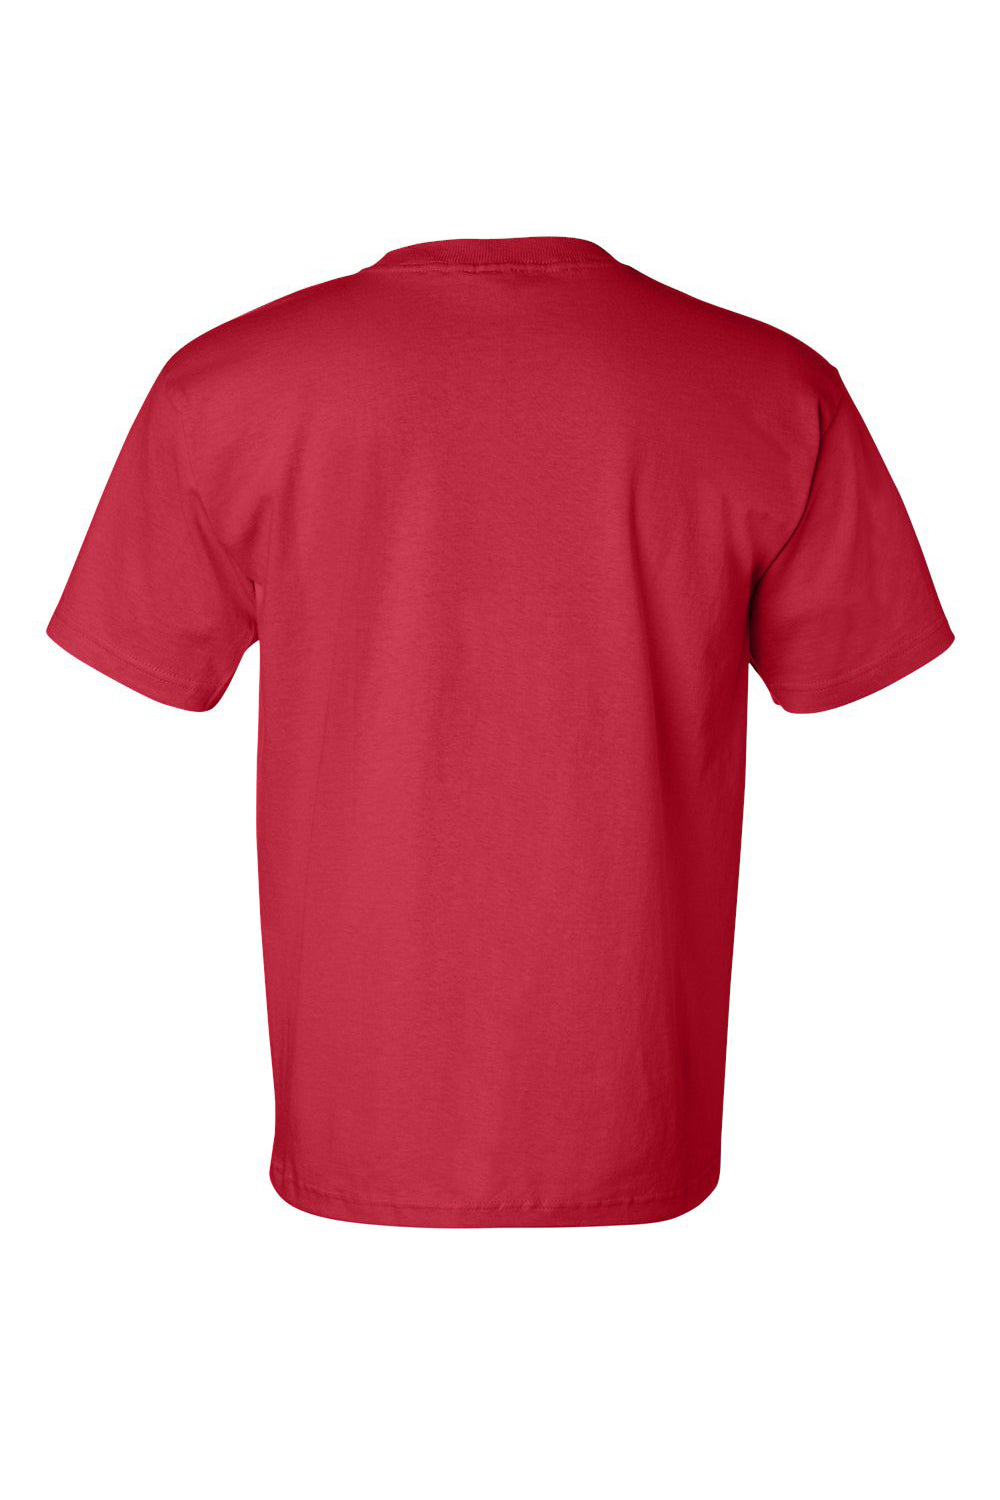 Bayside BA7100 Mens USA Made Short Sleeve Crewneck T-Shirt w/ Pocket Red Flat Back